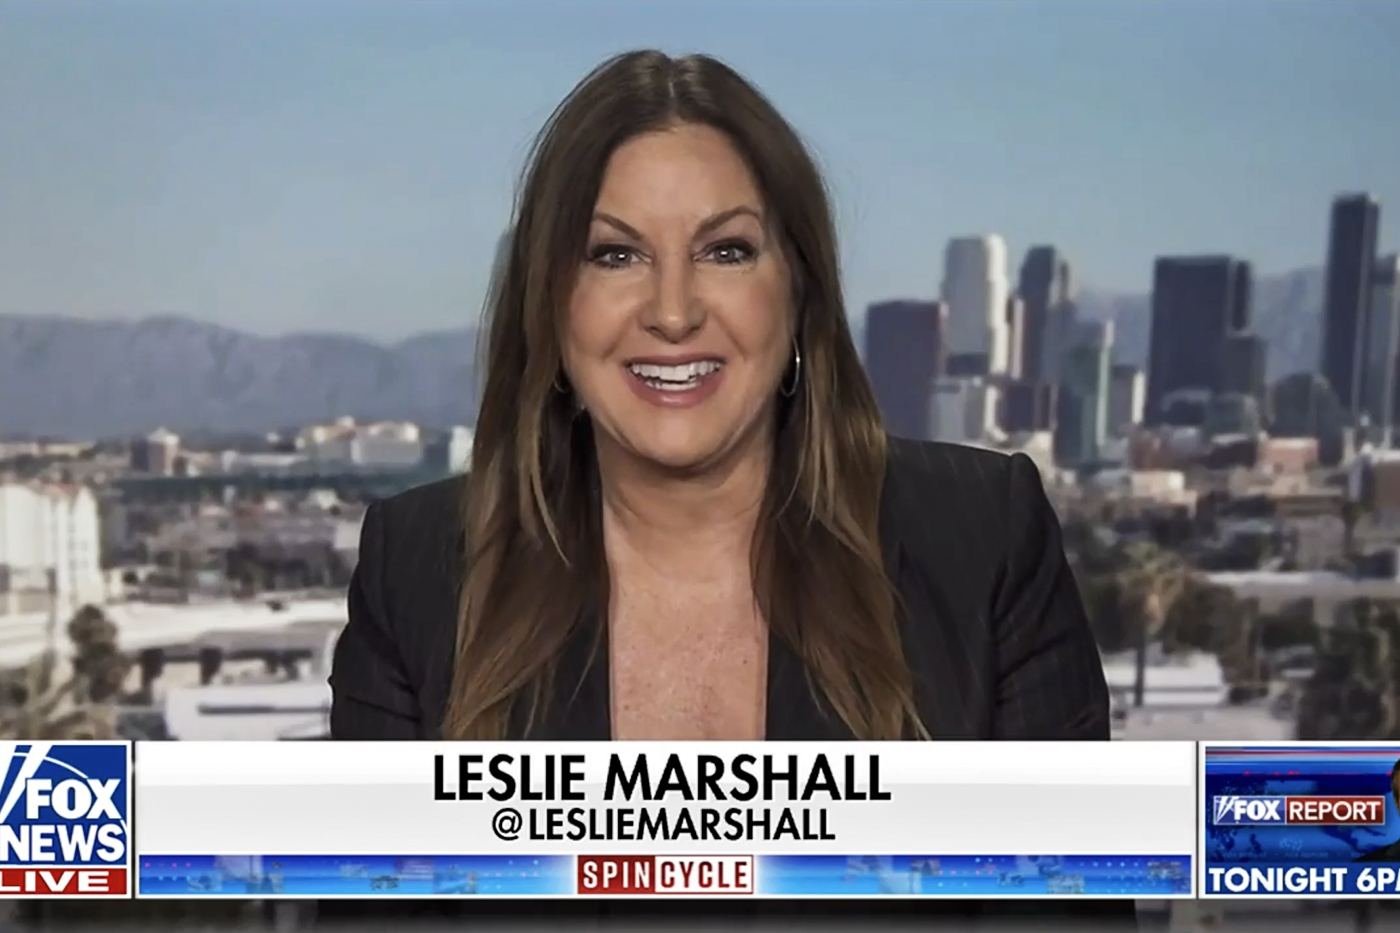 screen capture of Leslie Marshall broadcasting on Fox news